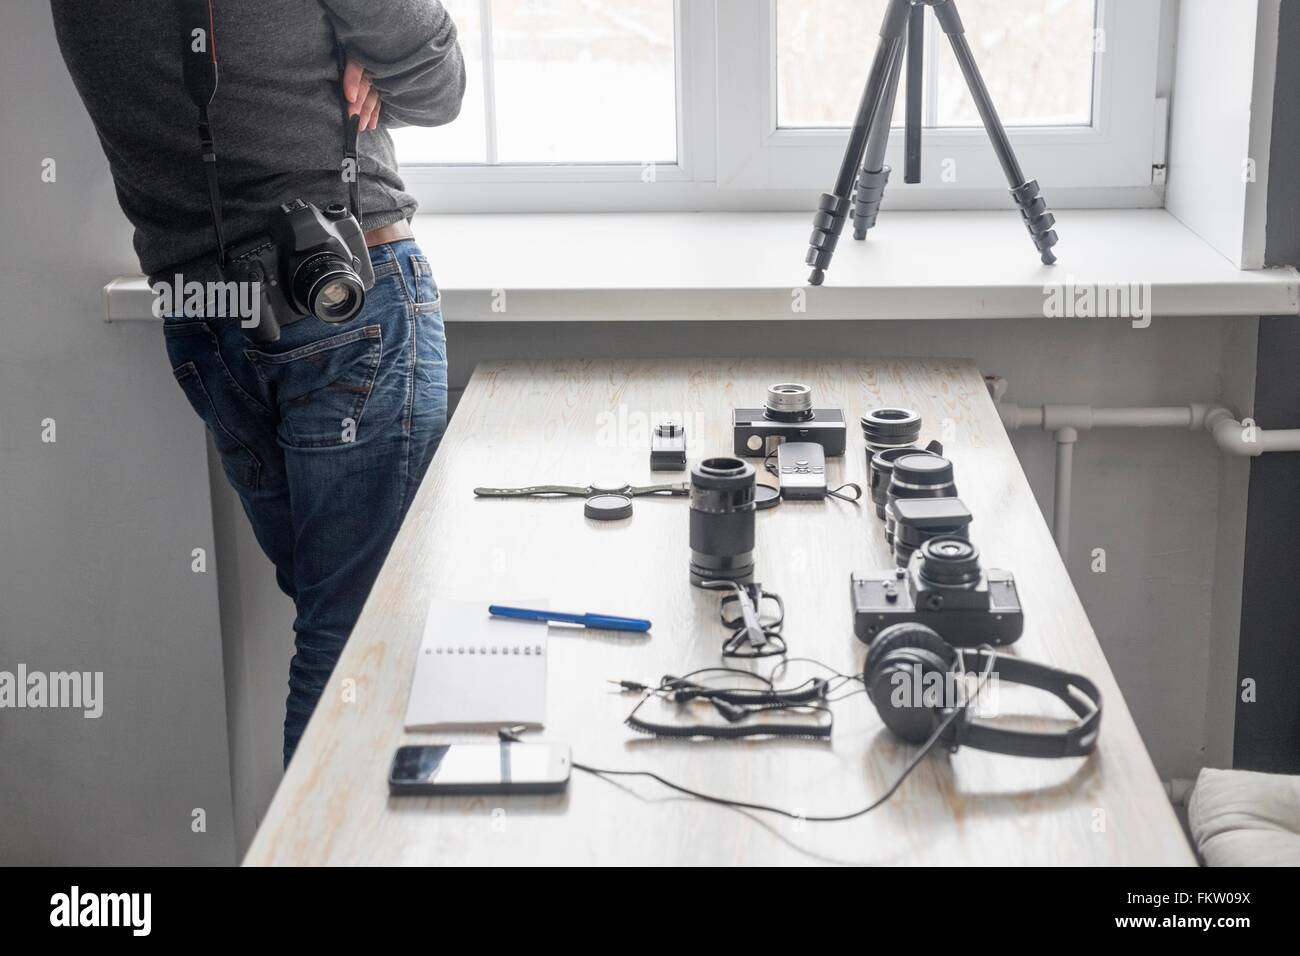 Male photographer next to photography equipment on studio desk Stock Photo